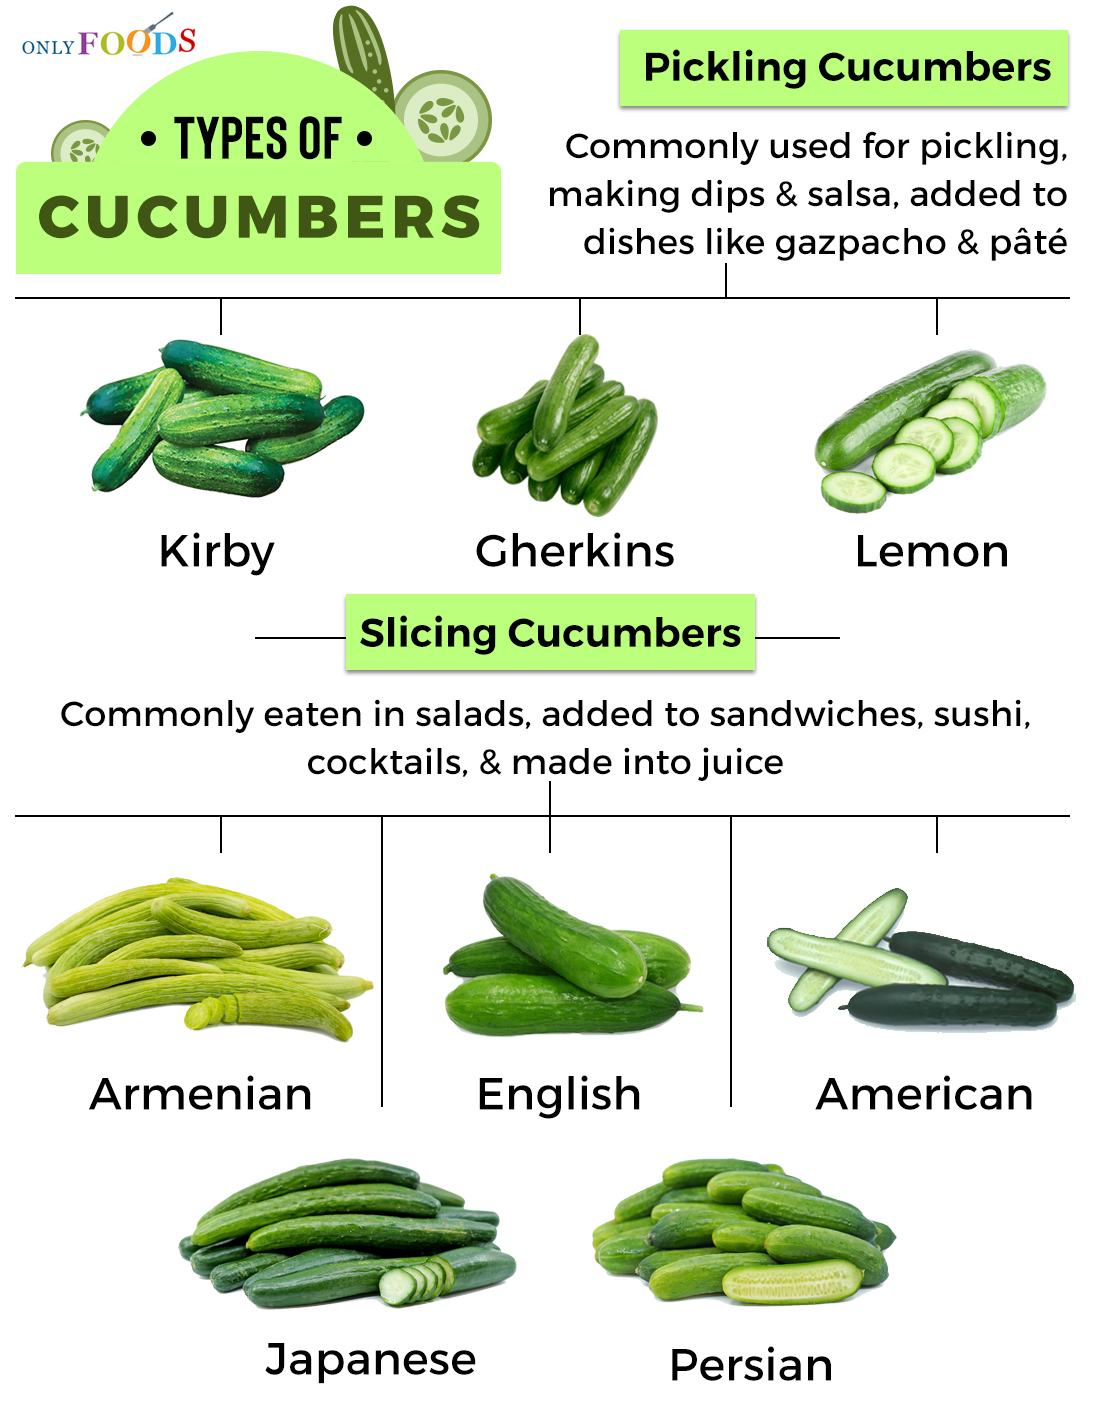 https://www.onlyfoods.net/wp-content/uploads/2020/08/Types-of-Cucumbers.jpg